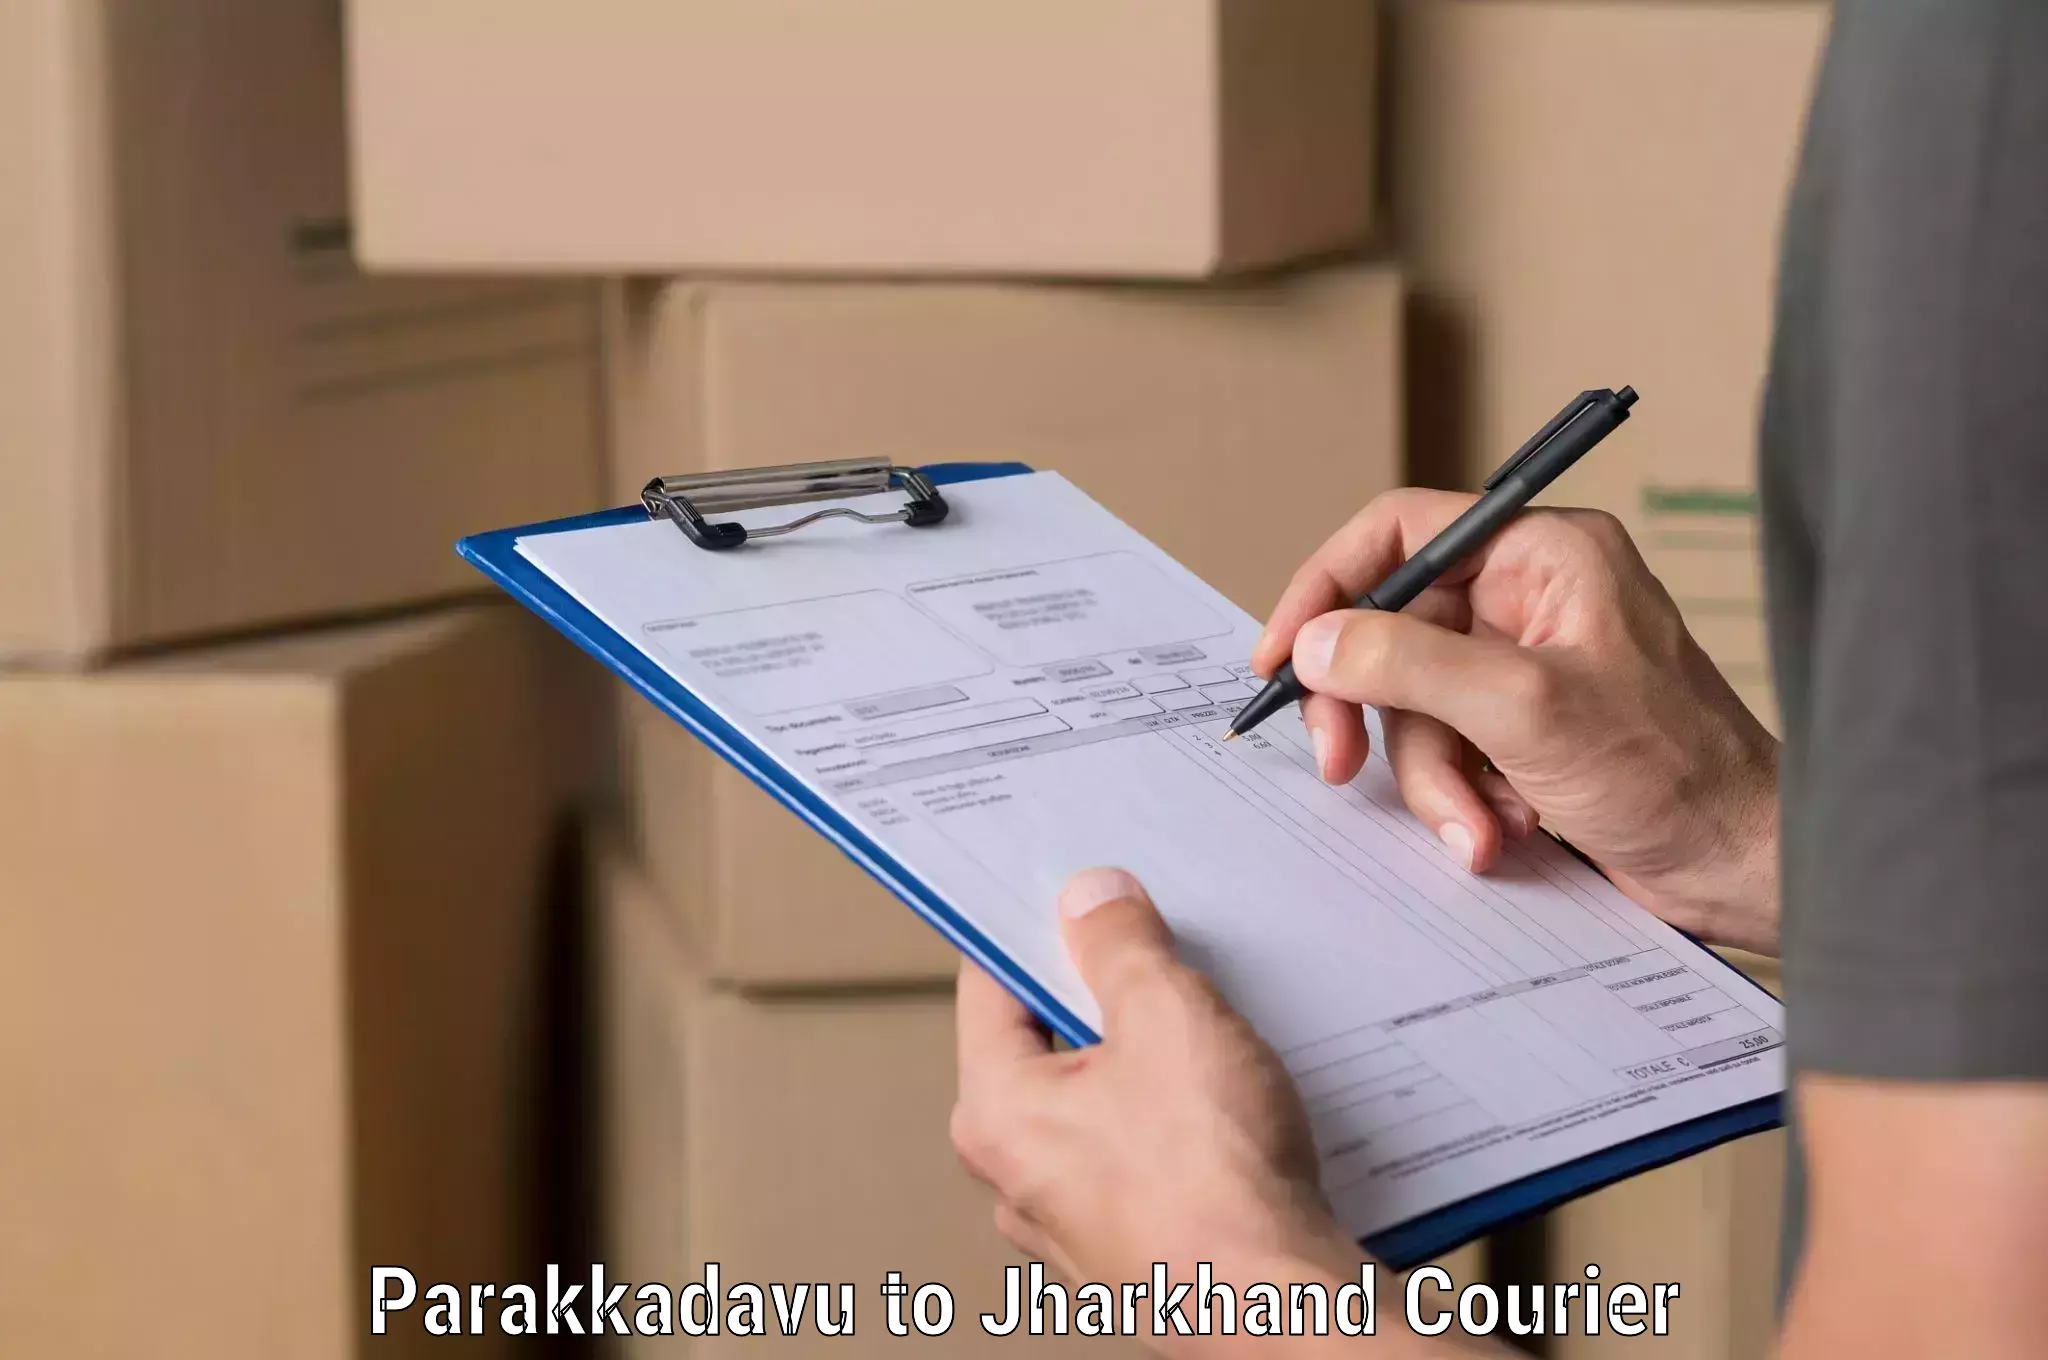 Affordable parcel service Parakkadavu to Ramgarh